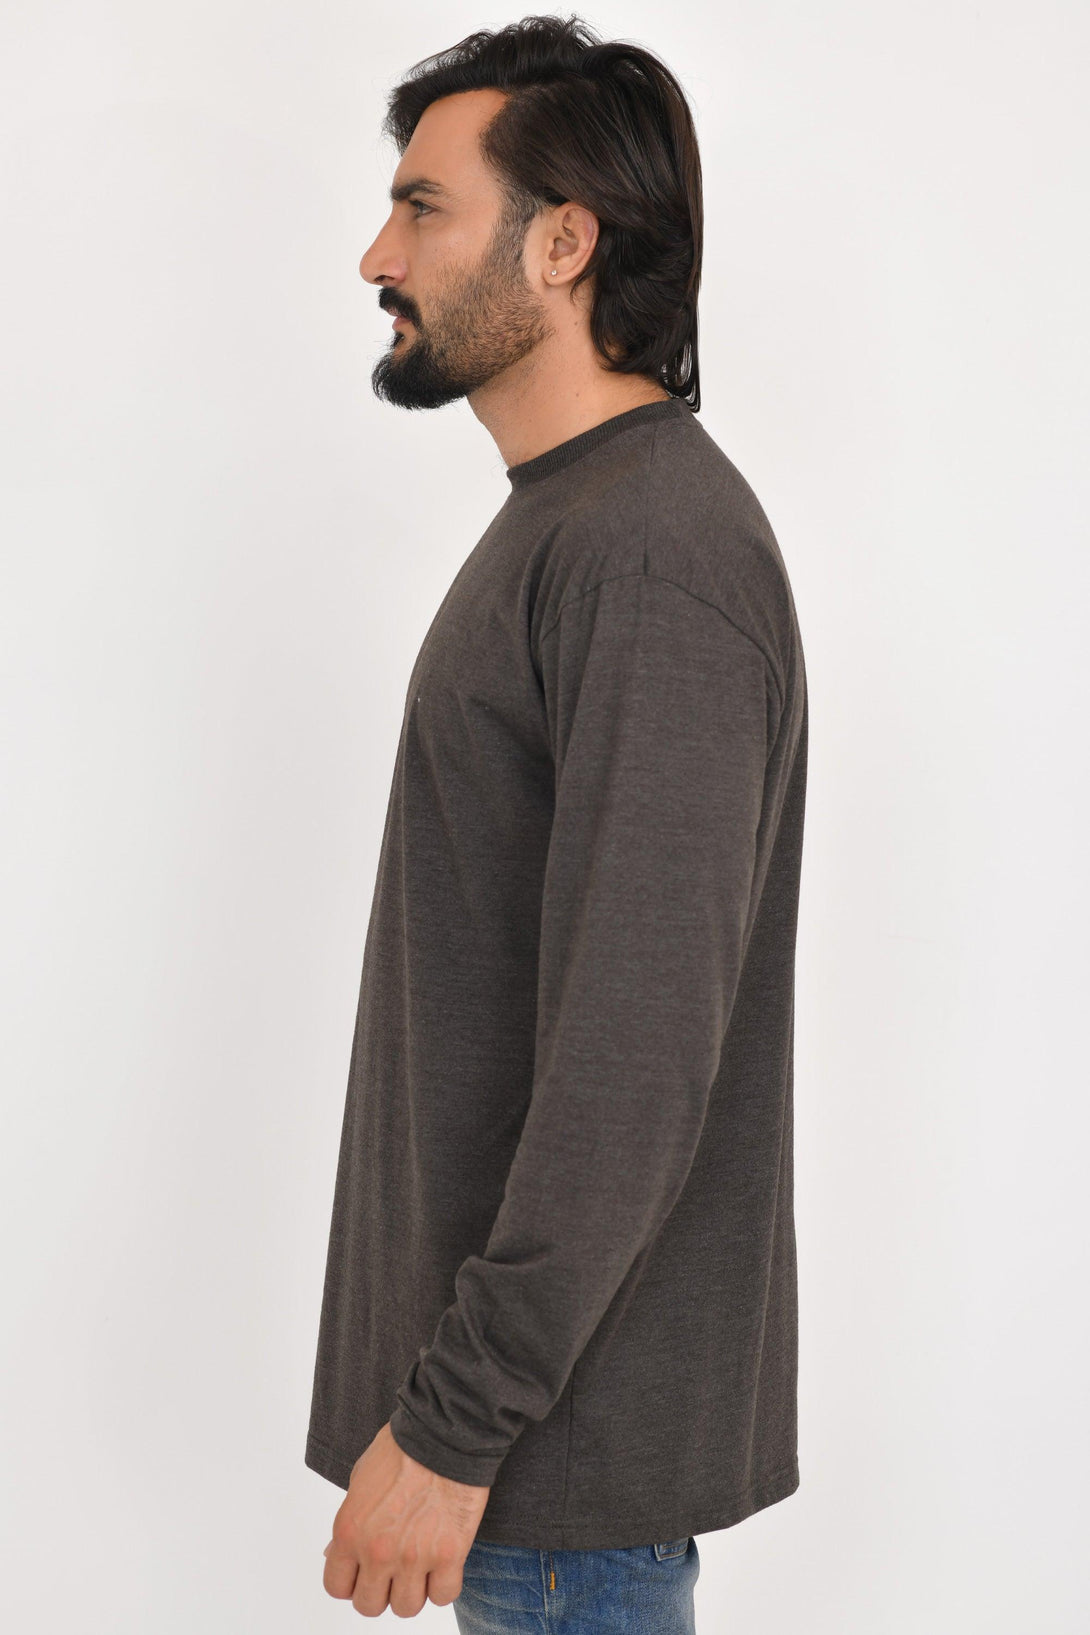 Long & Tall Full Sleeves Shirts | Pack of 3 | Hunter Green - Charcoal - Lagoon - FTS